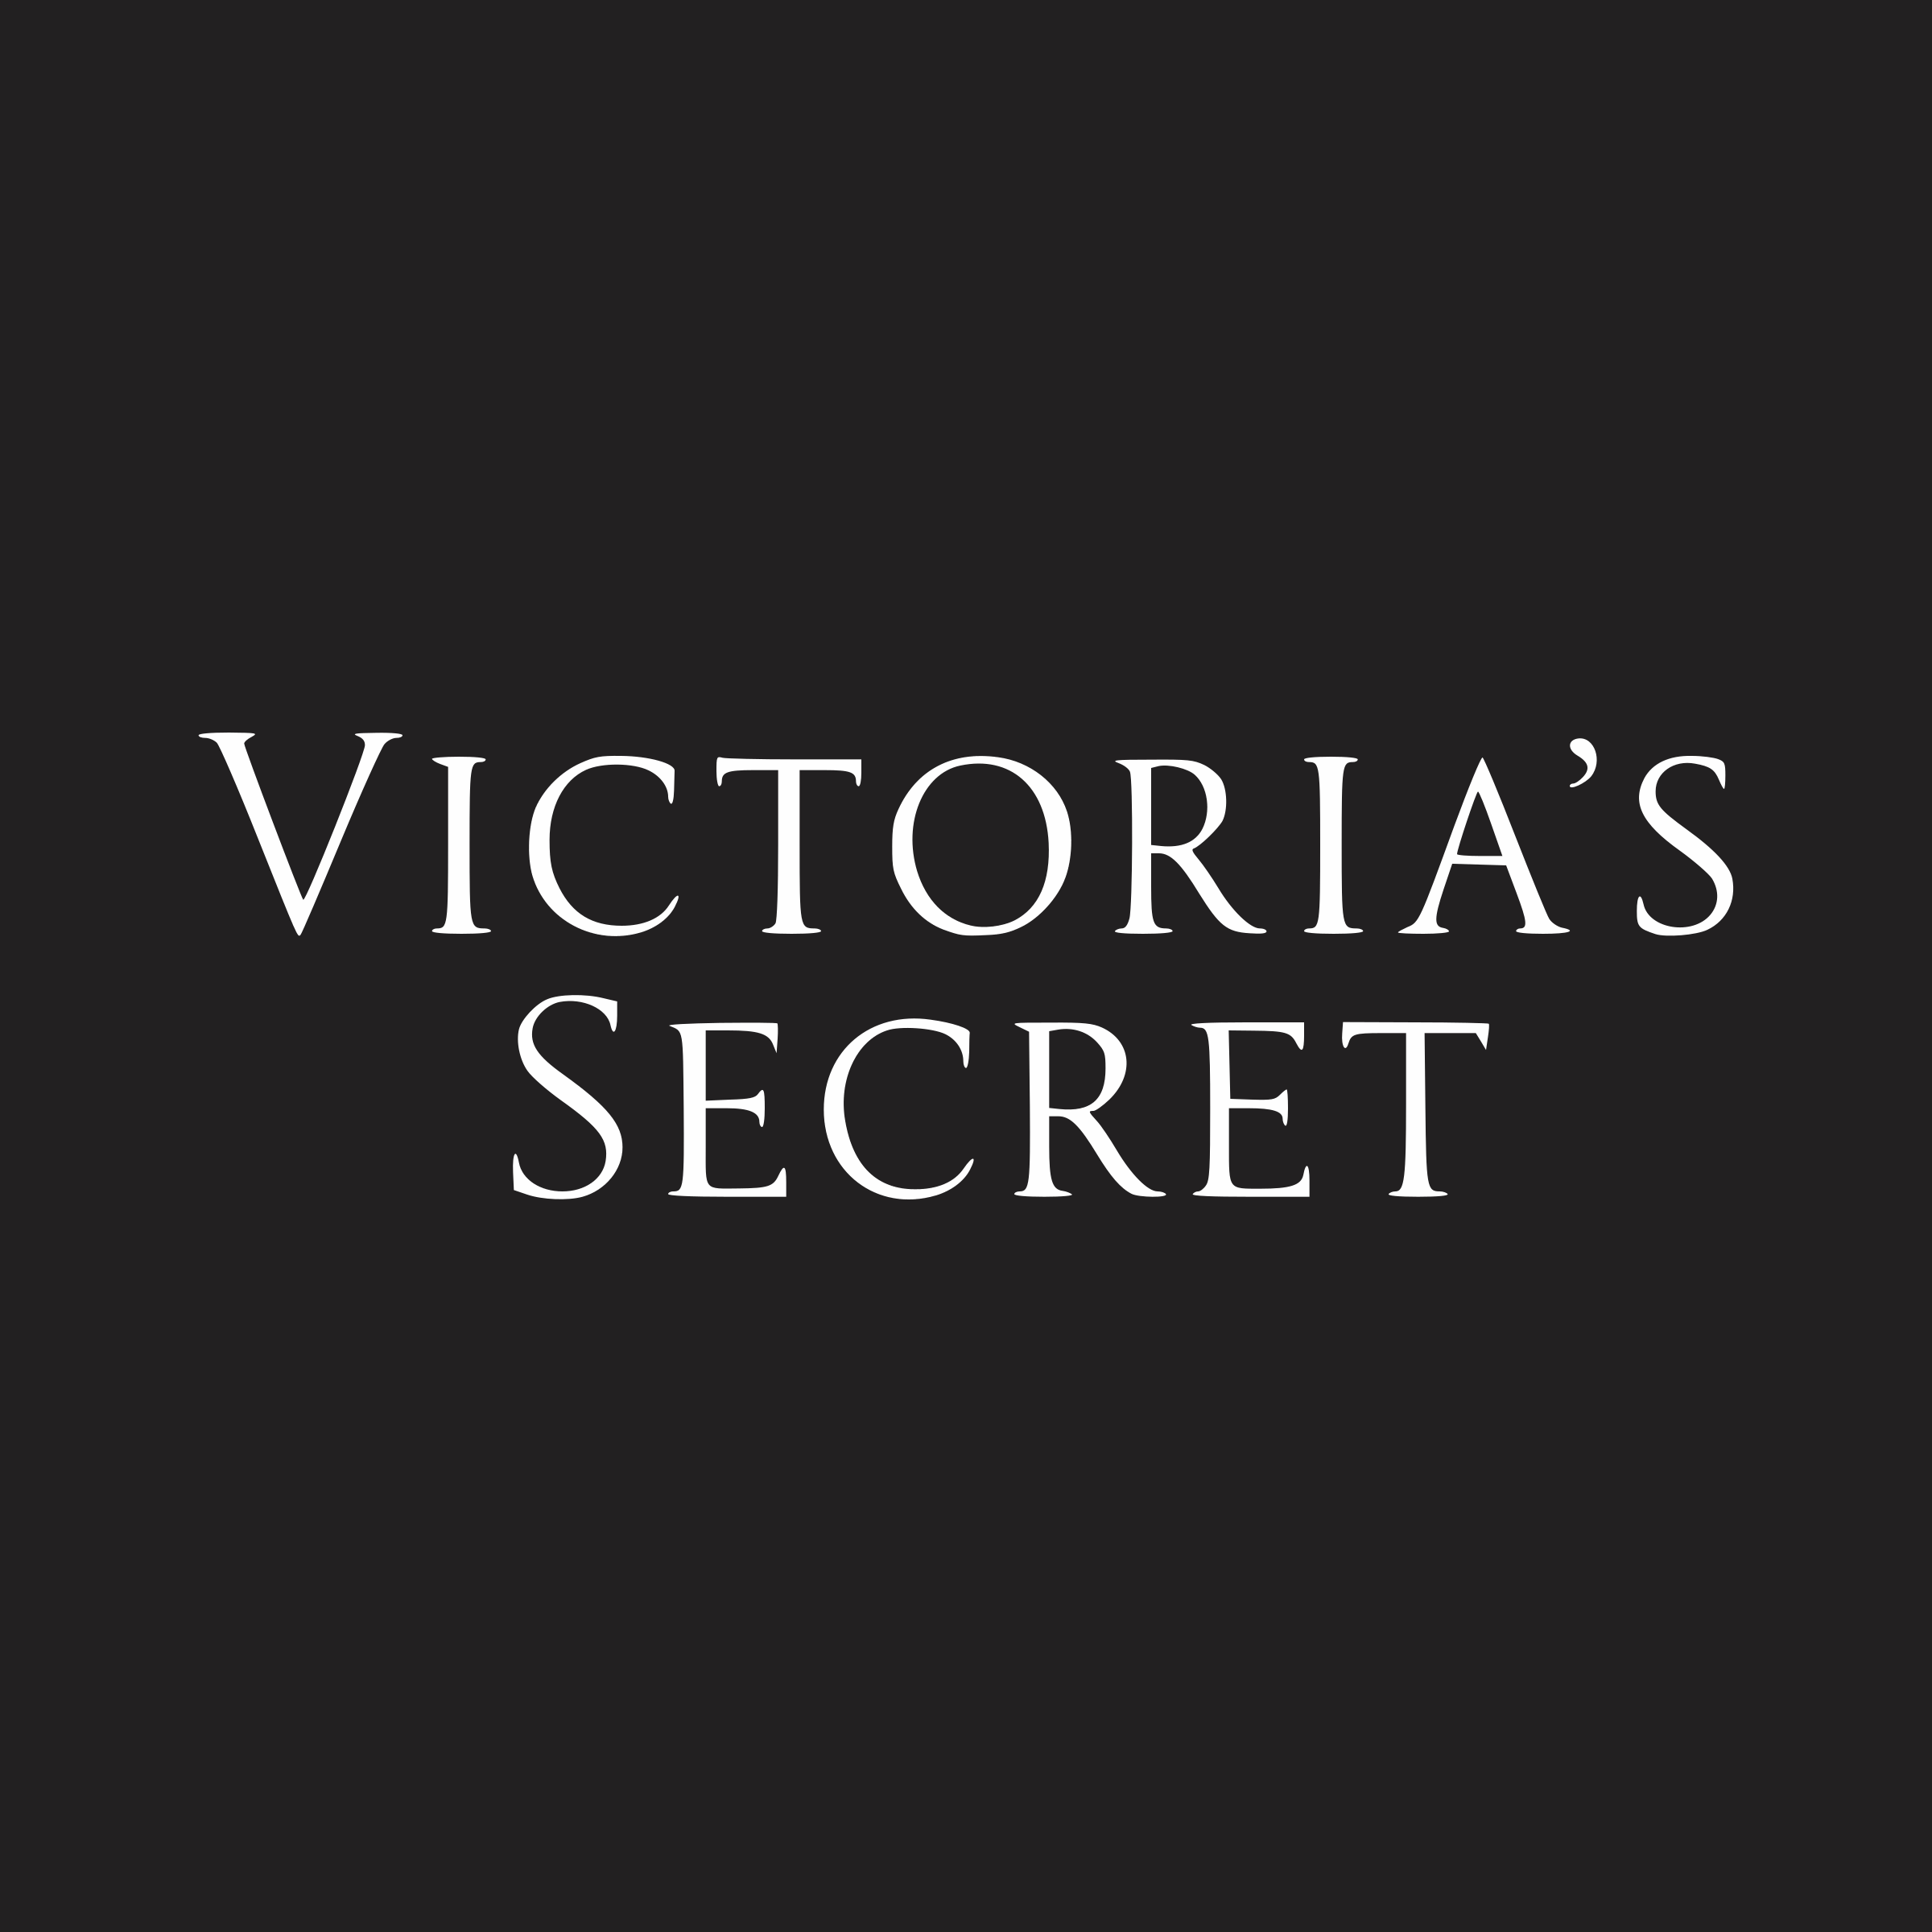 The Victoria's Secret Logo - Victoria's Secret Logo PNG Transparent & SVG Vector - Freebie Supply